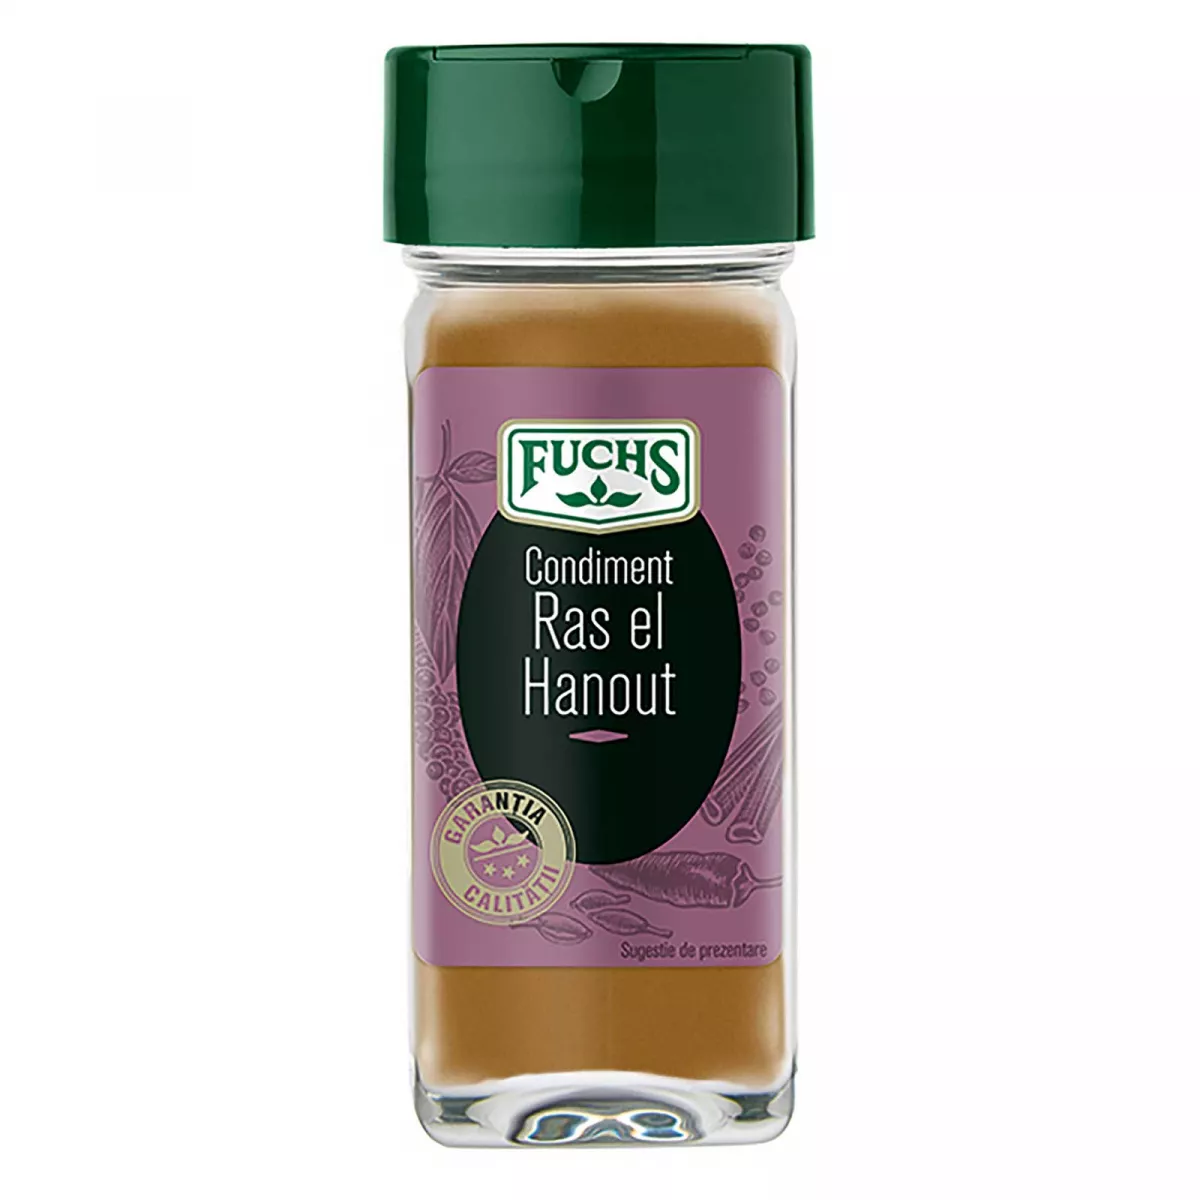 Condiment Ras el Hanout, Fuchs, 36g